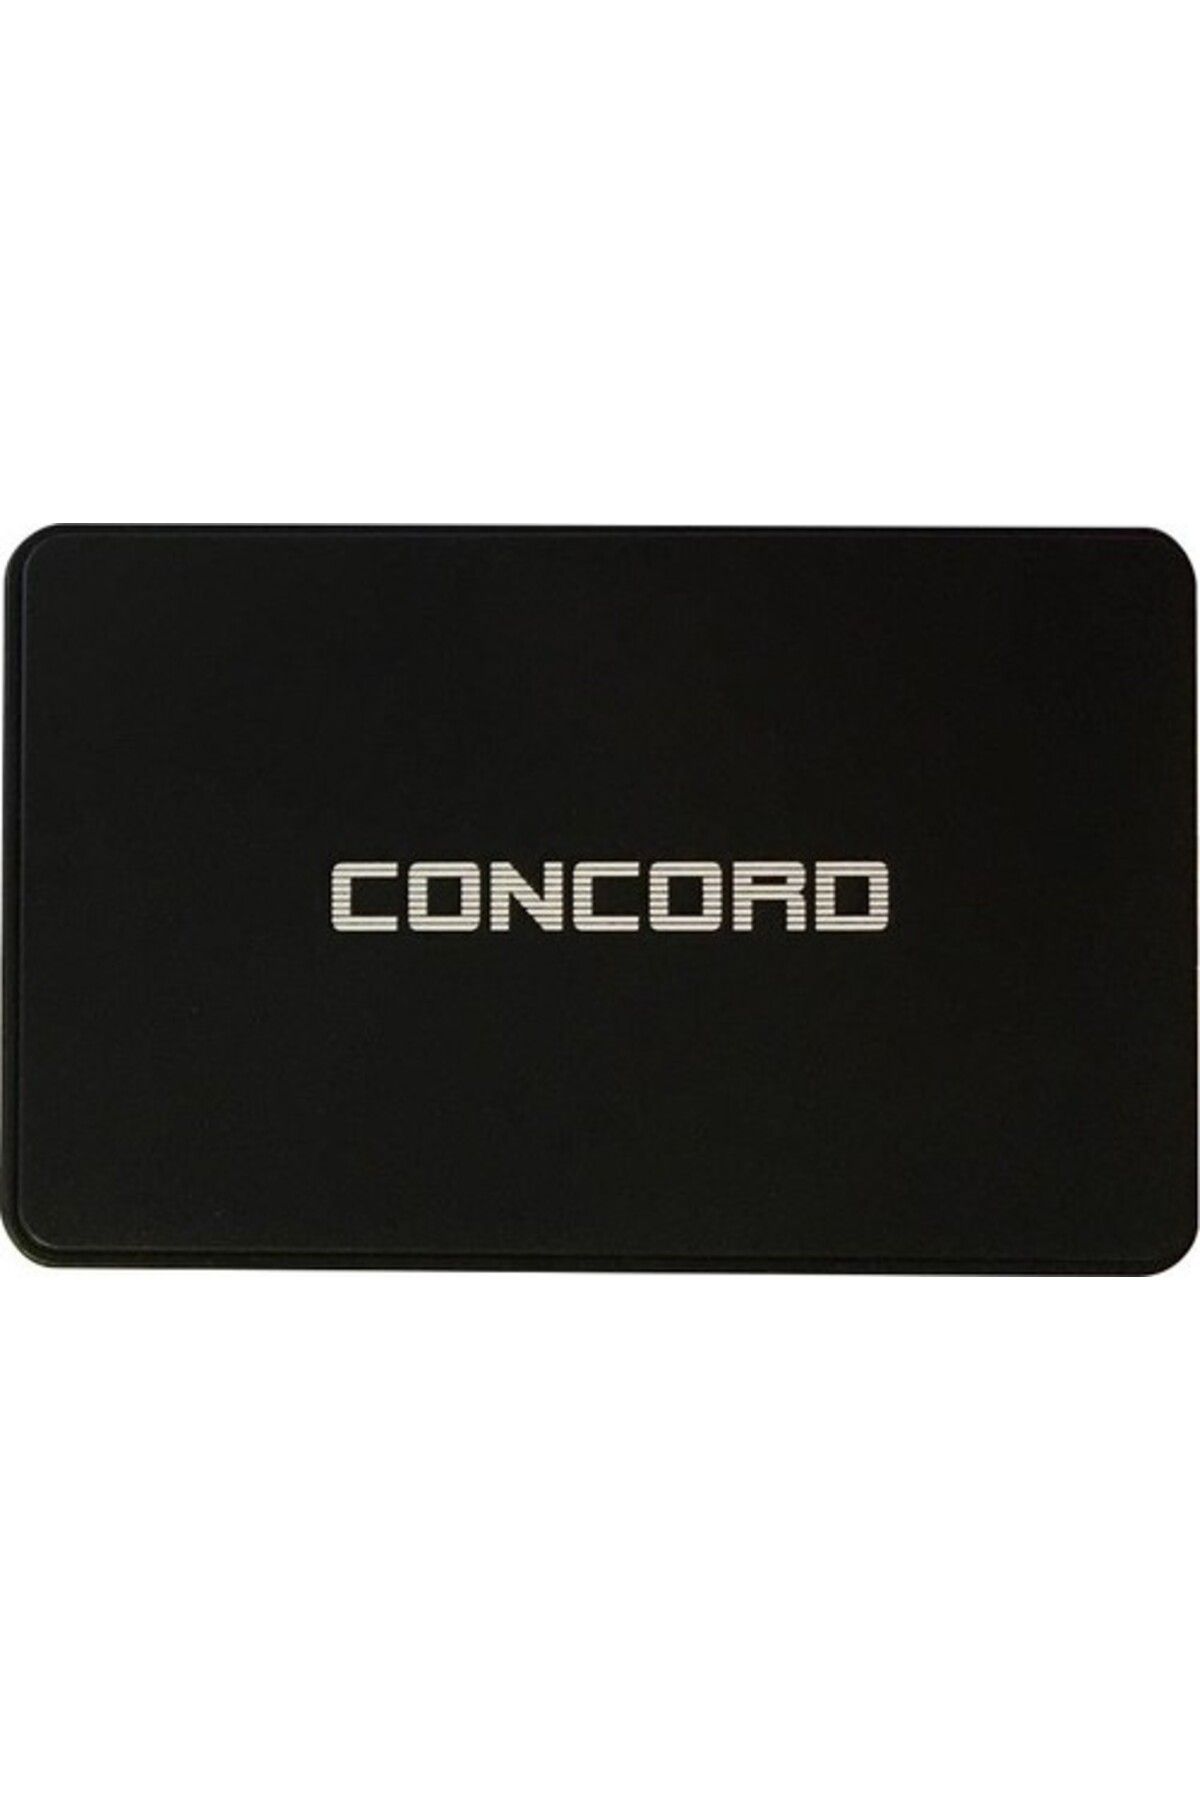 Concord 2.5” USB 3.0 / 6 Gbps Sata Harddisk HDD Kutusu C-855